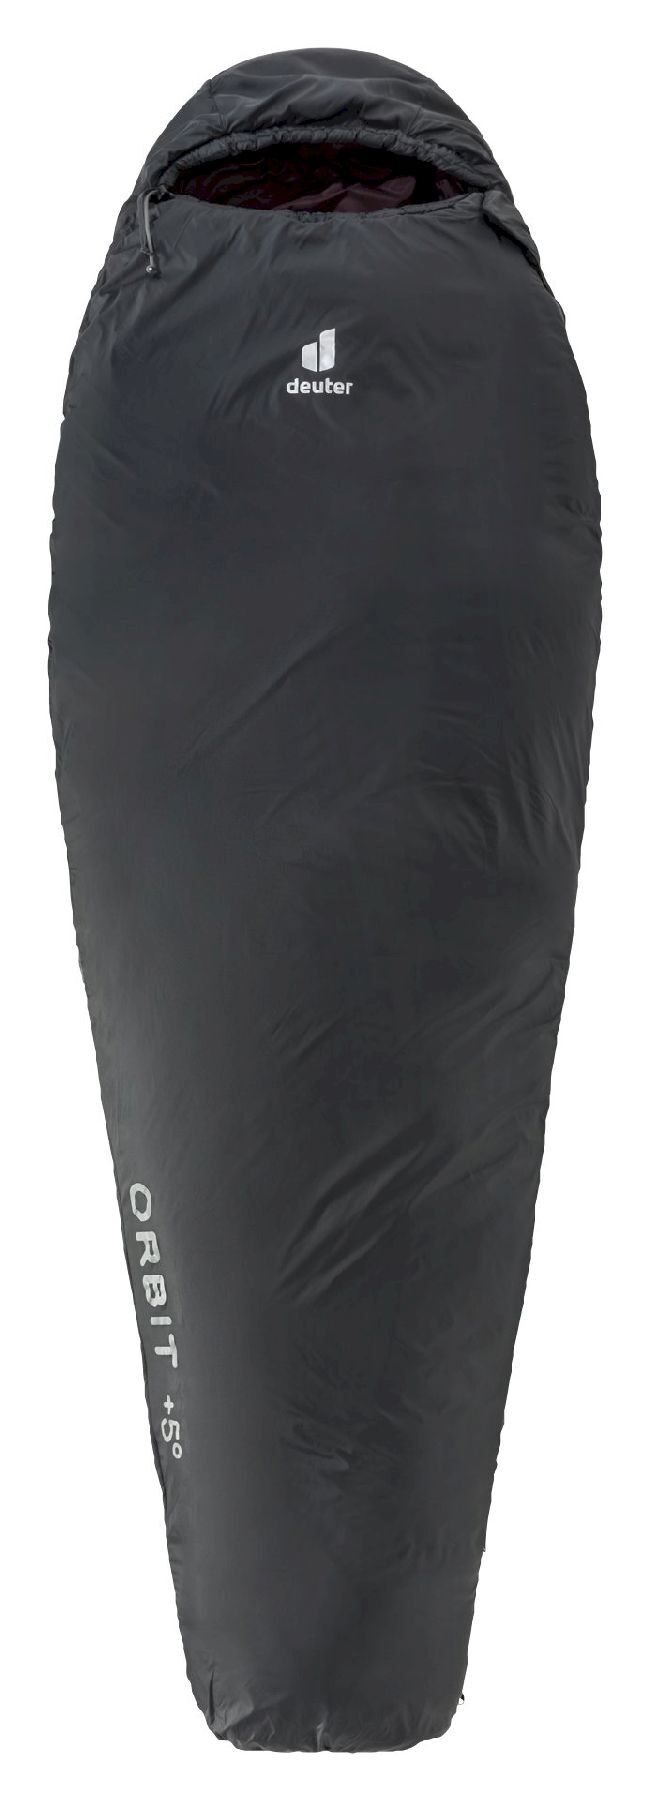 Deuter Orbit +5° - Sleeping bag